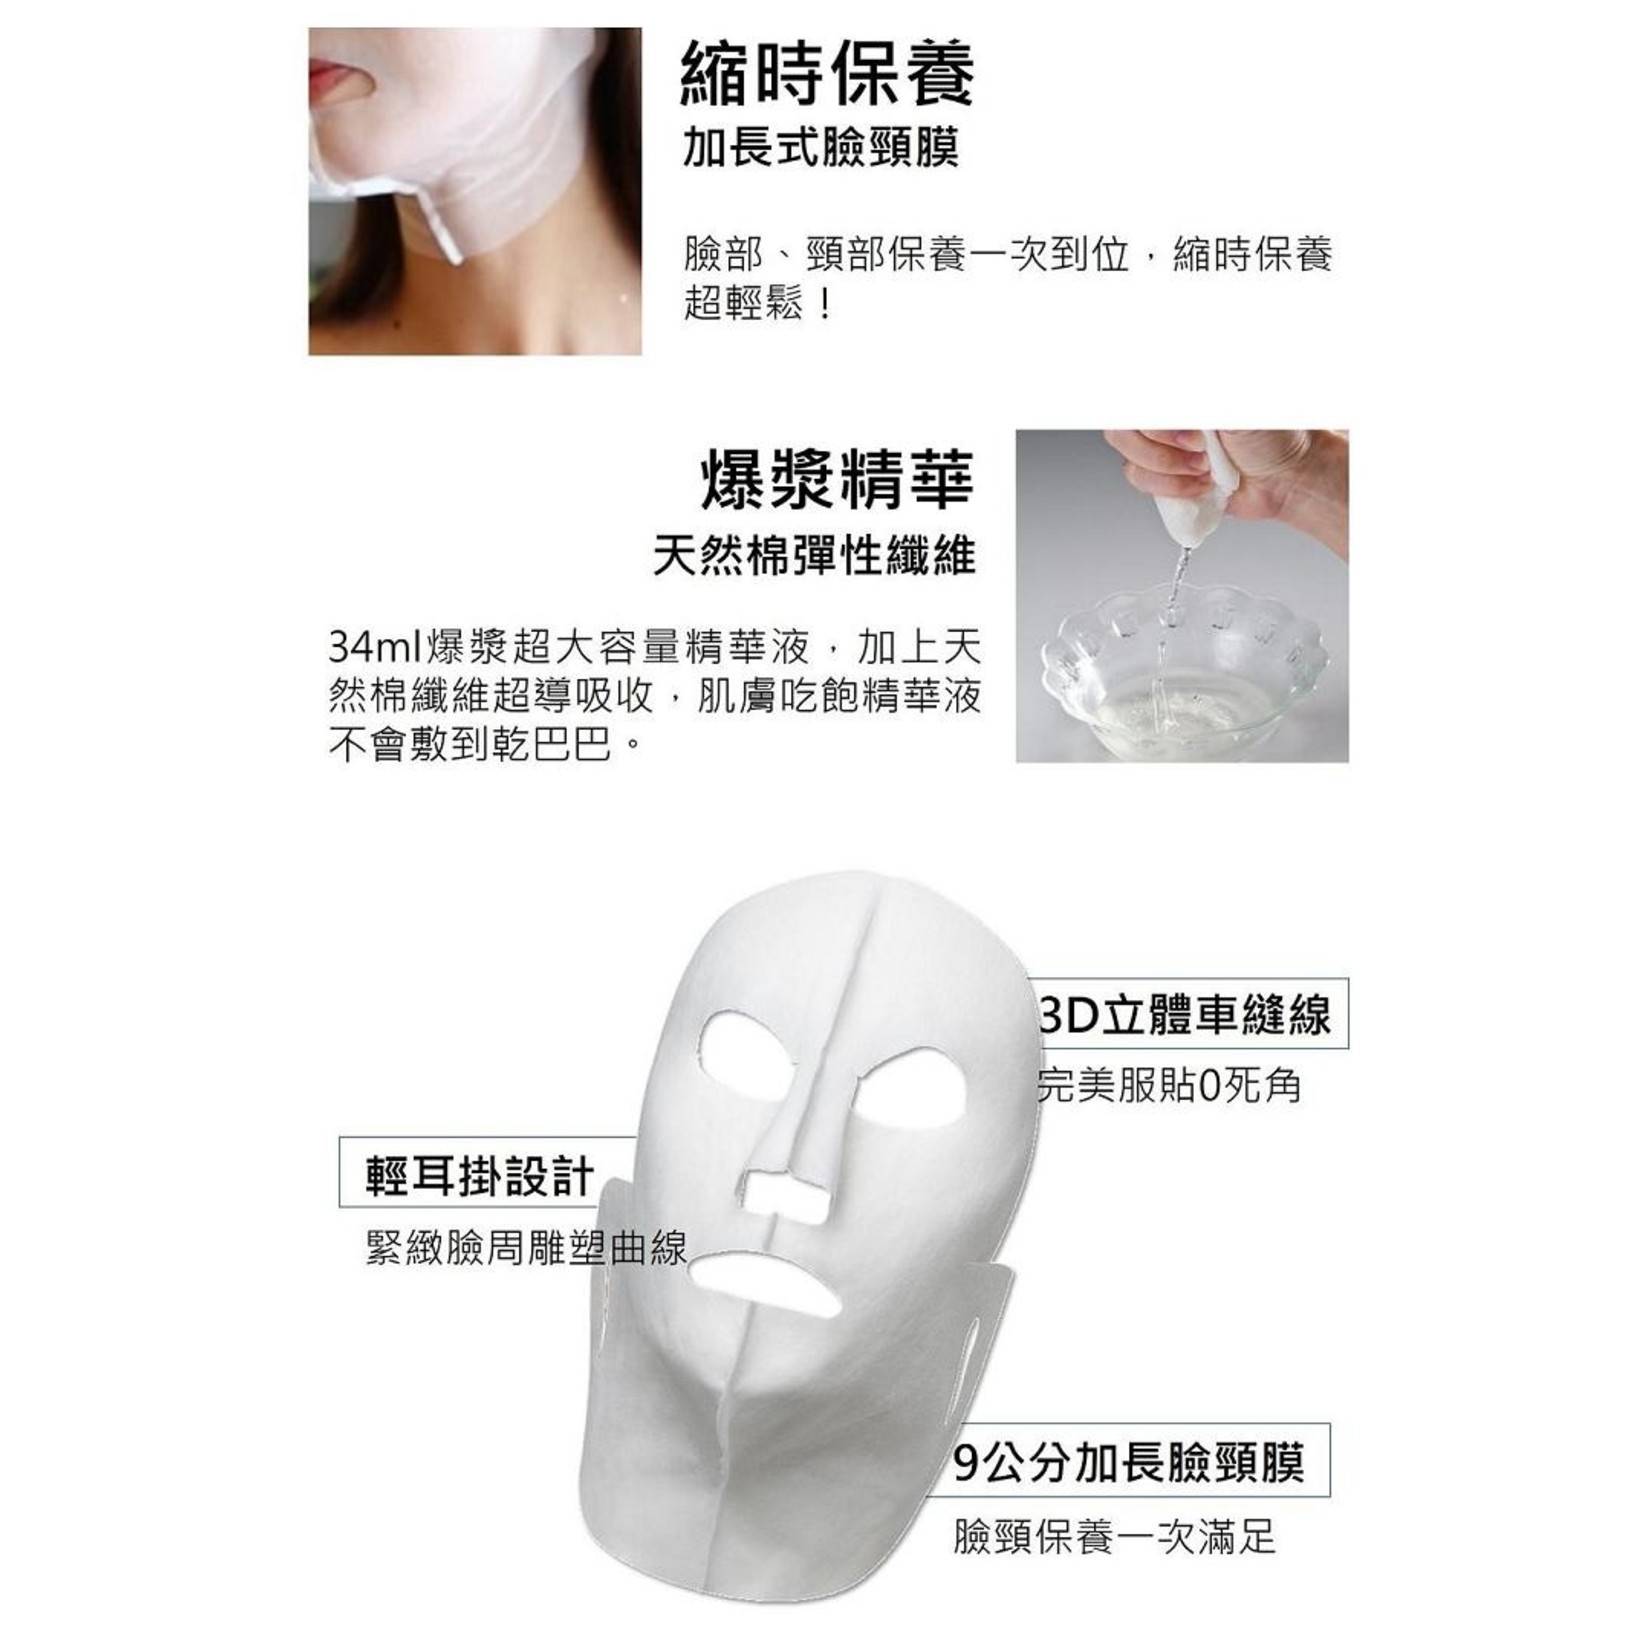 Dr.s Formula Super Hydrating Hyaluronic Mask (1+1 pcs)